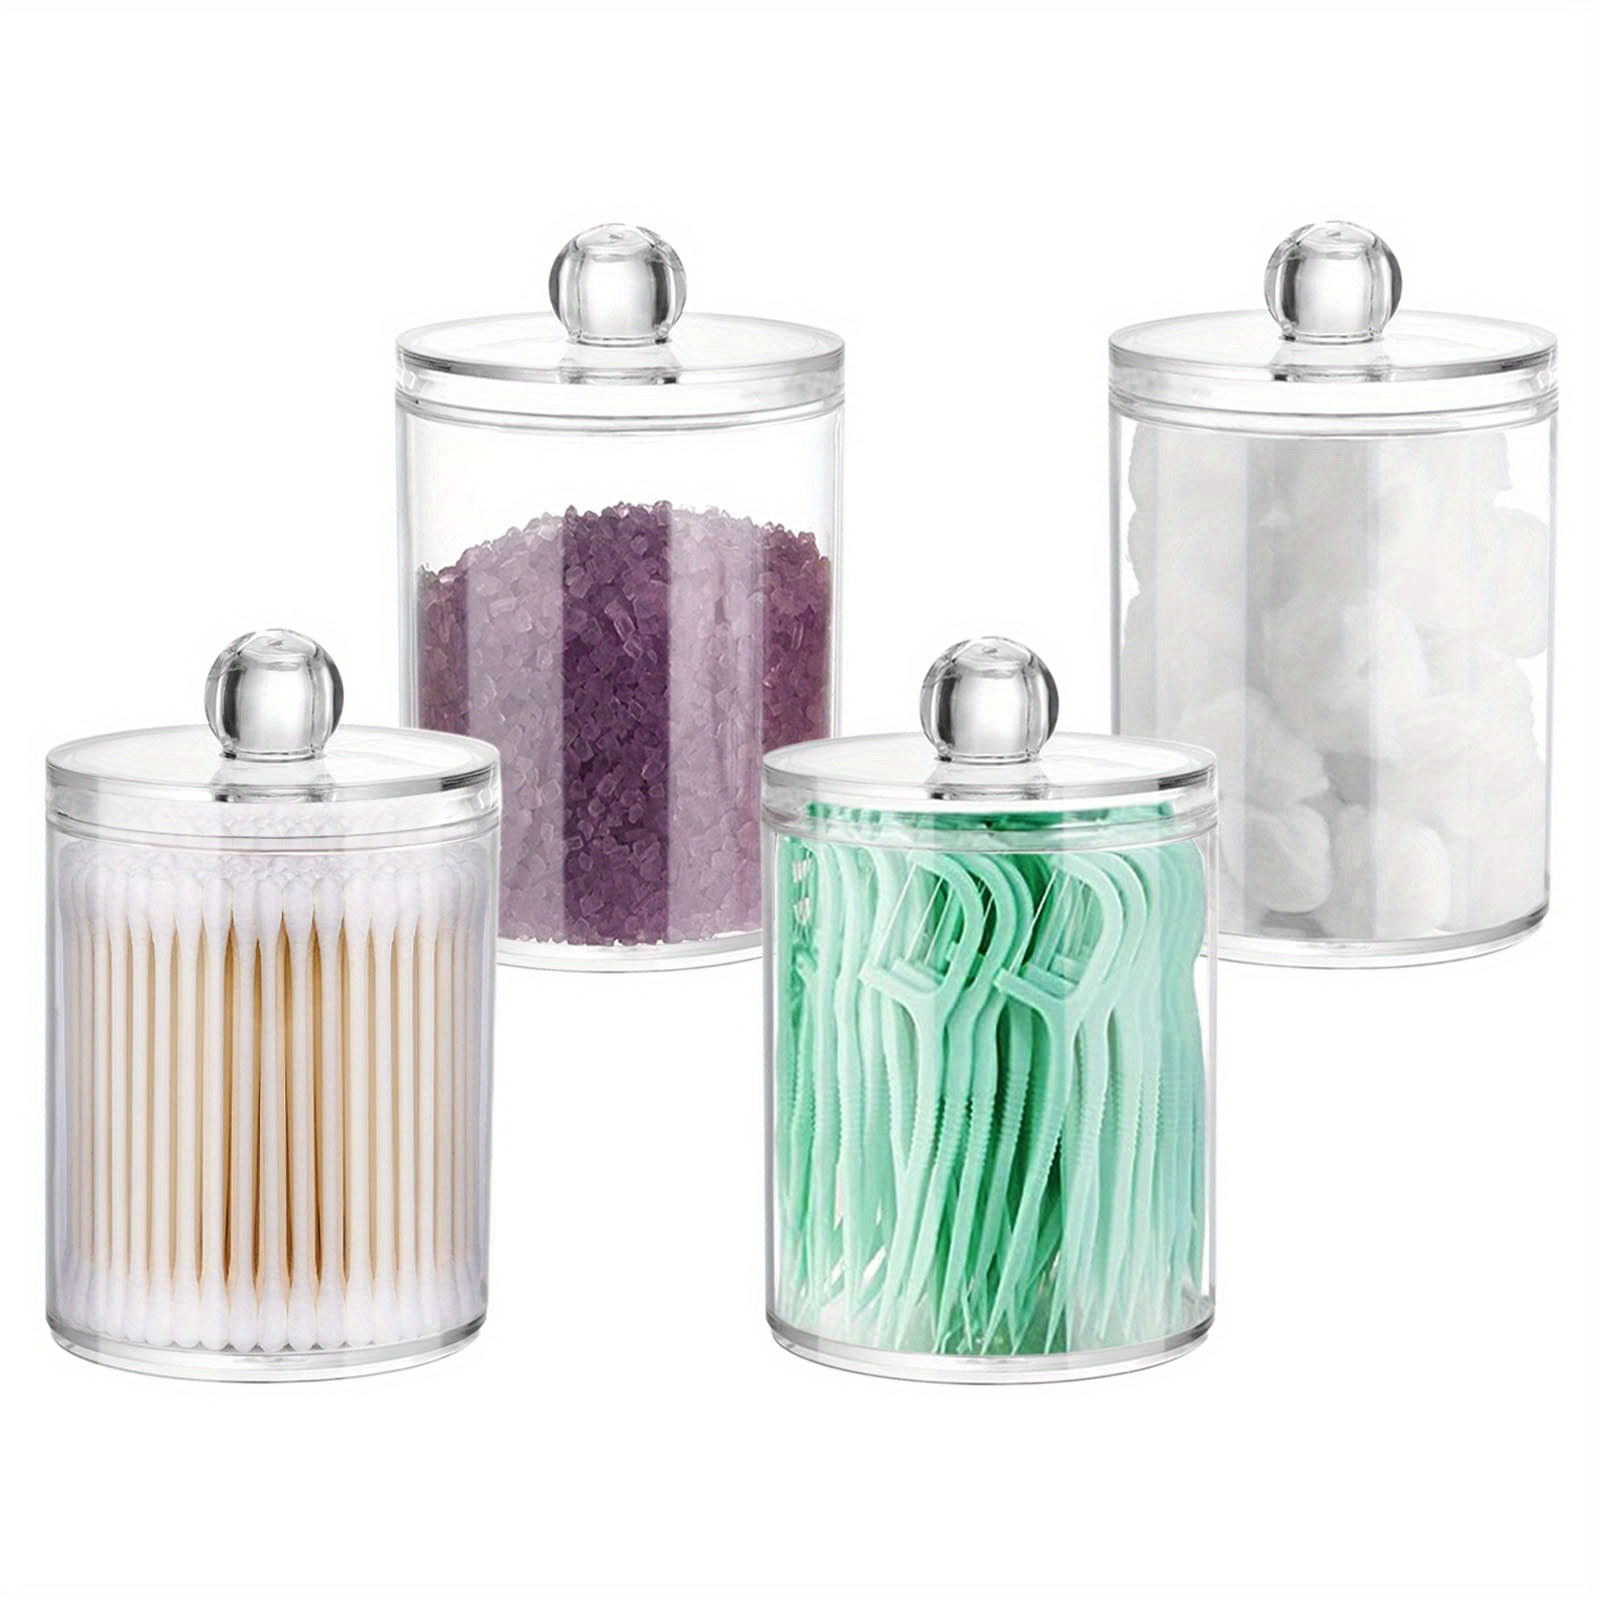  ZENWAWA Mayan Patterns Cotton Swab Dispenser Holder Jars 2  Pack, Floss Container for Bathroom Vanity Countertop Waterproof Dustproof  Canisters : Home & Kitchen